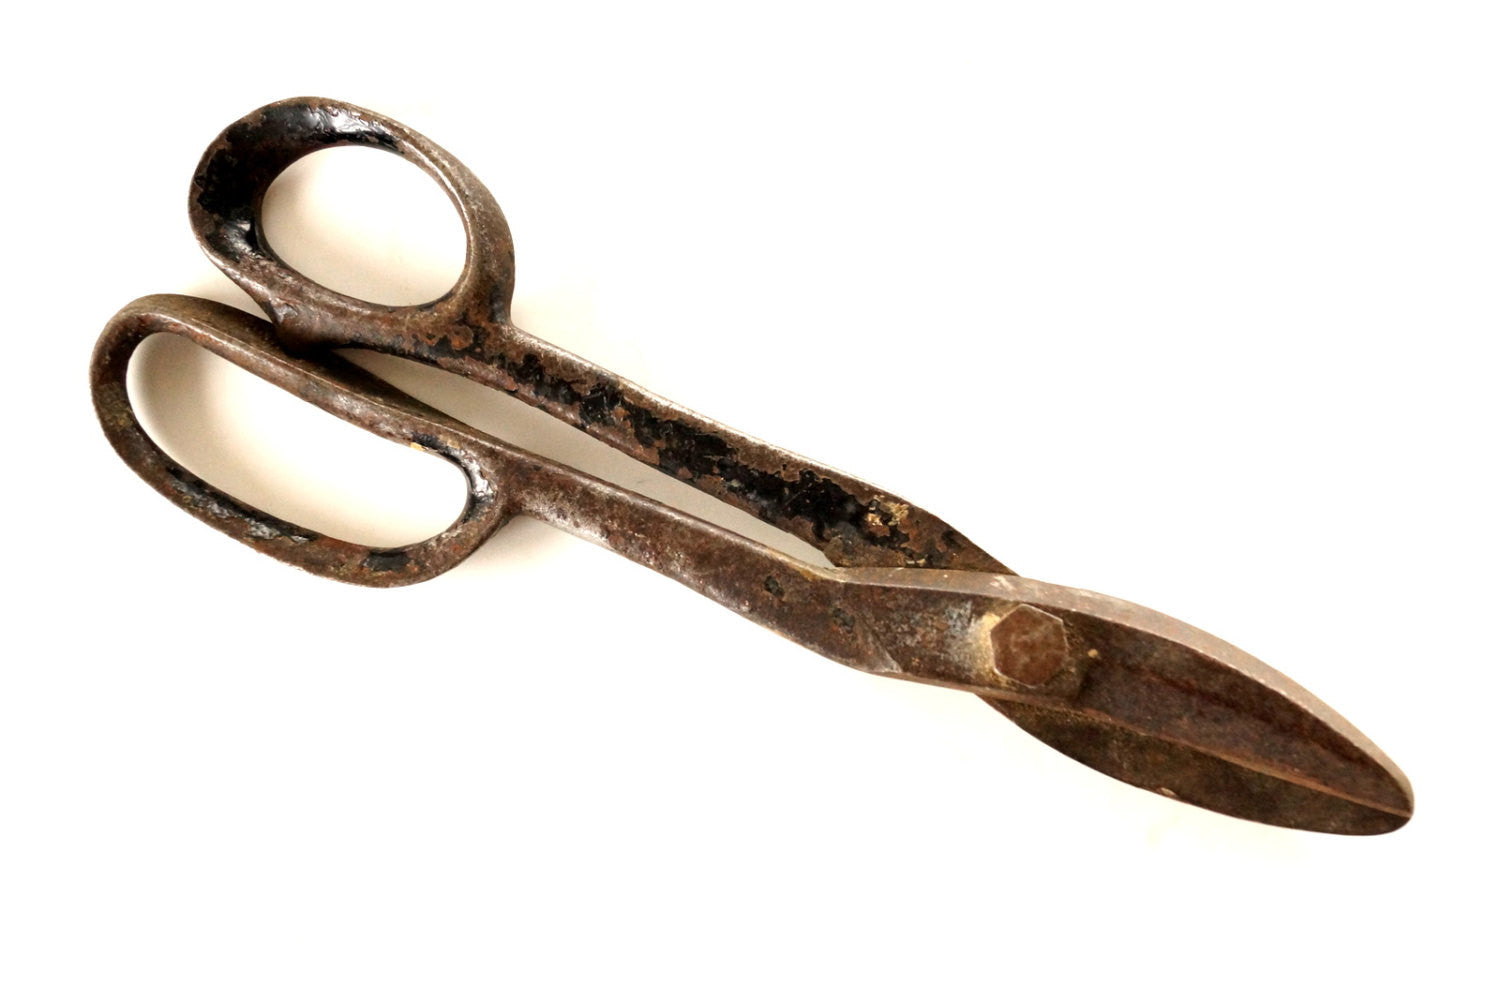 Vintage Large Heavy Metal Scissors Farm Shears (c.1940s)